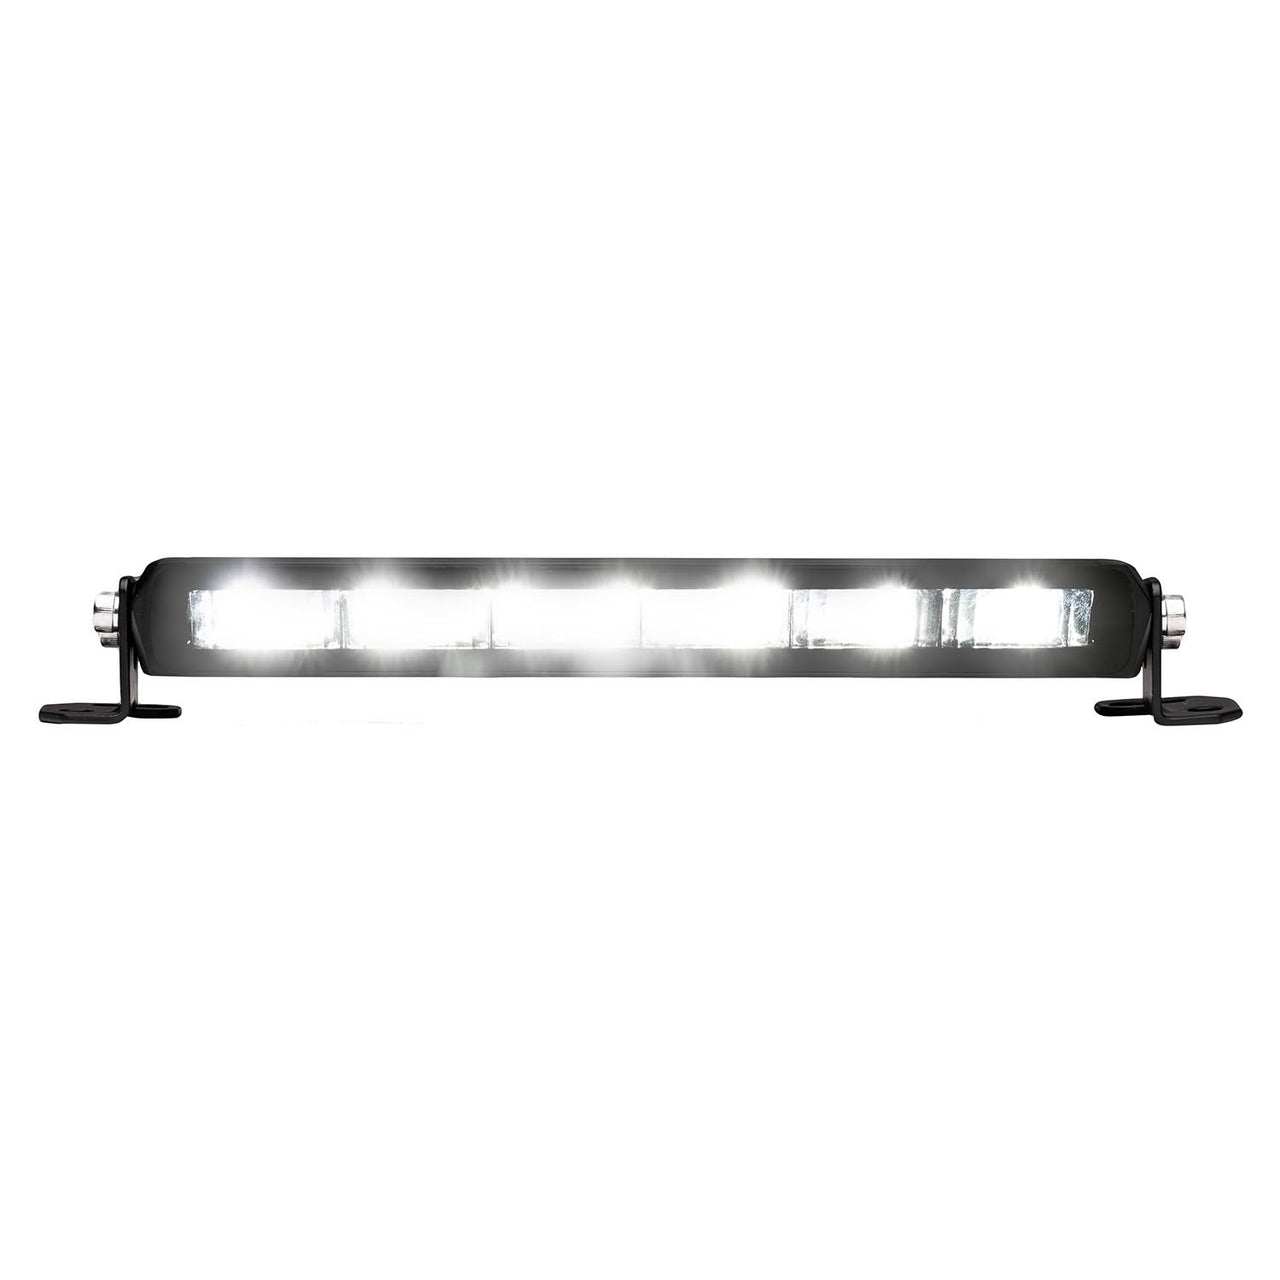 AUTOTEK ATO12BV1 12-inch Half Optic LED Lightbar, outdoor rated 2350 lumen.